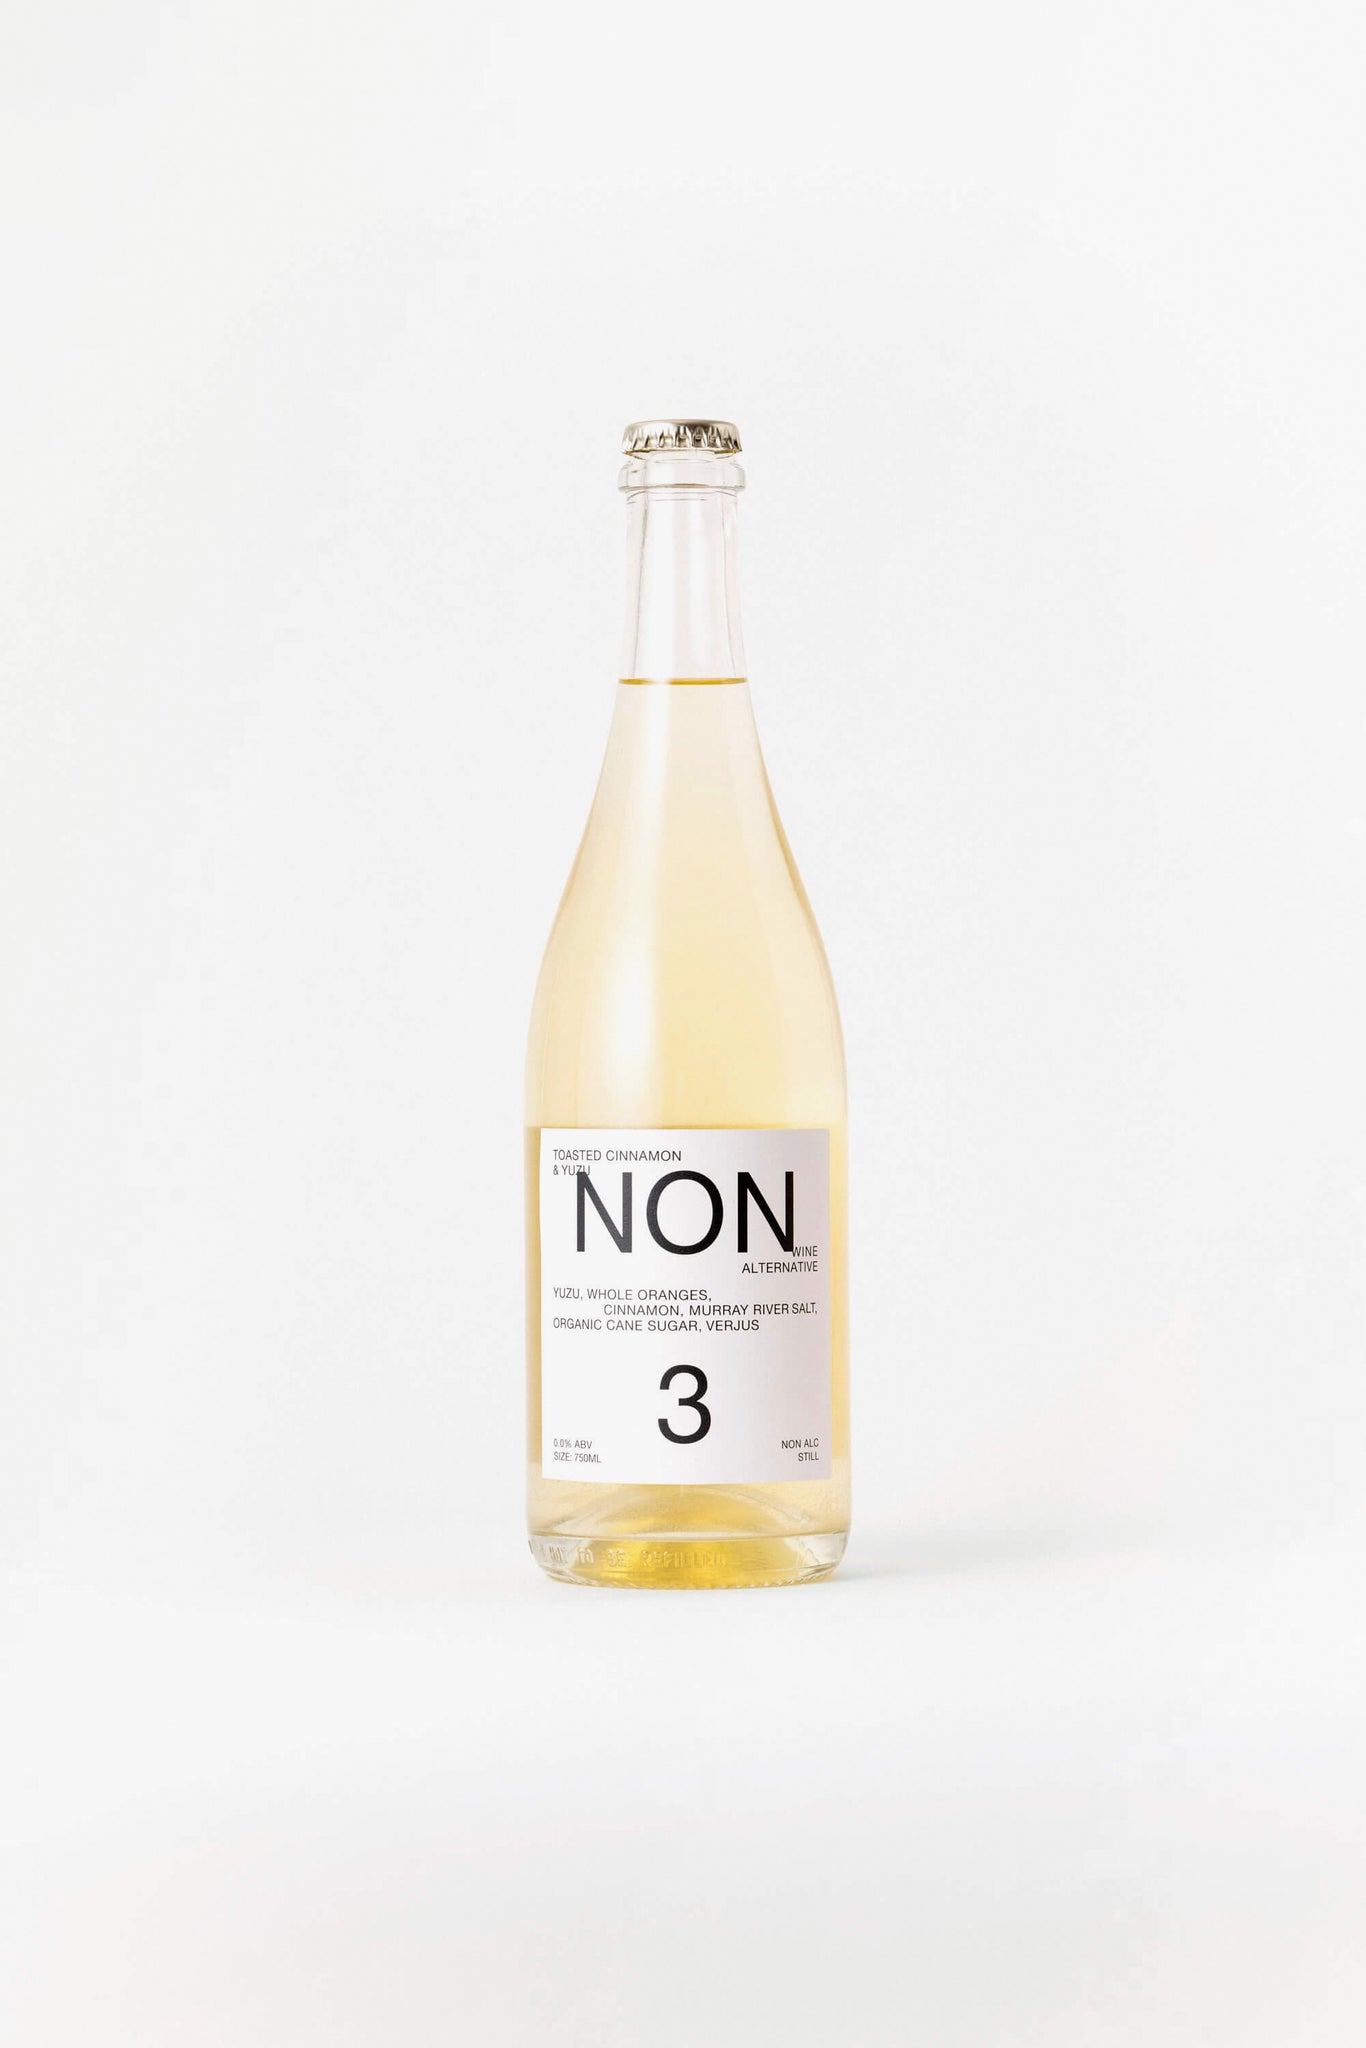 NON3 Toasted Cinnamon & Yuzu Bottle front label